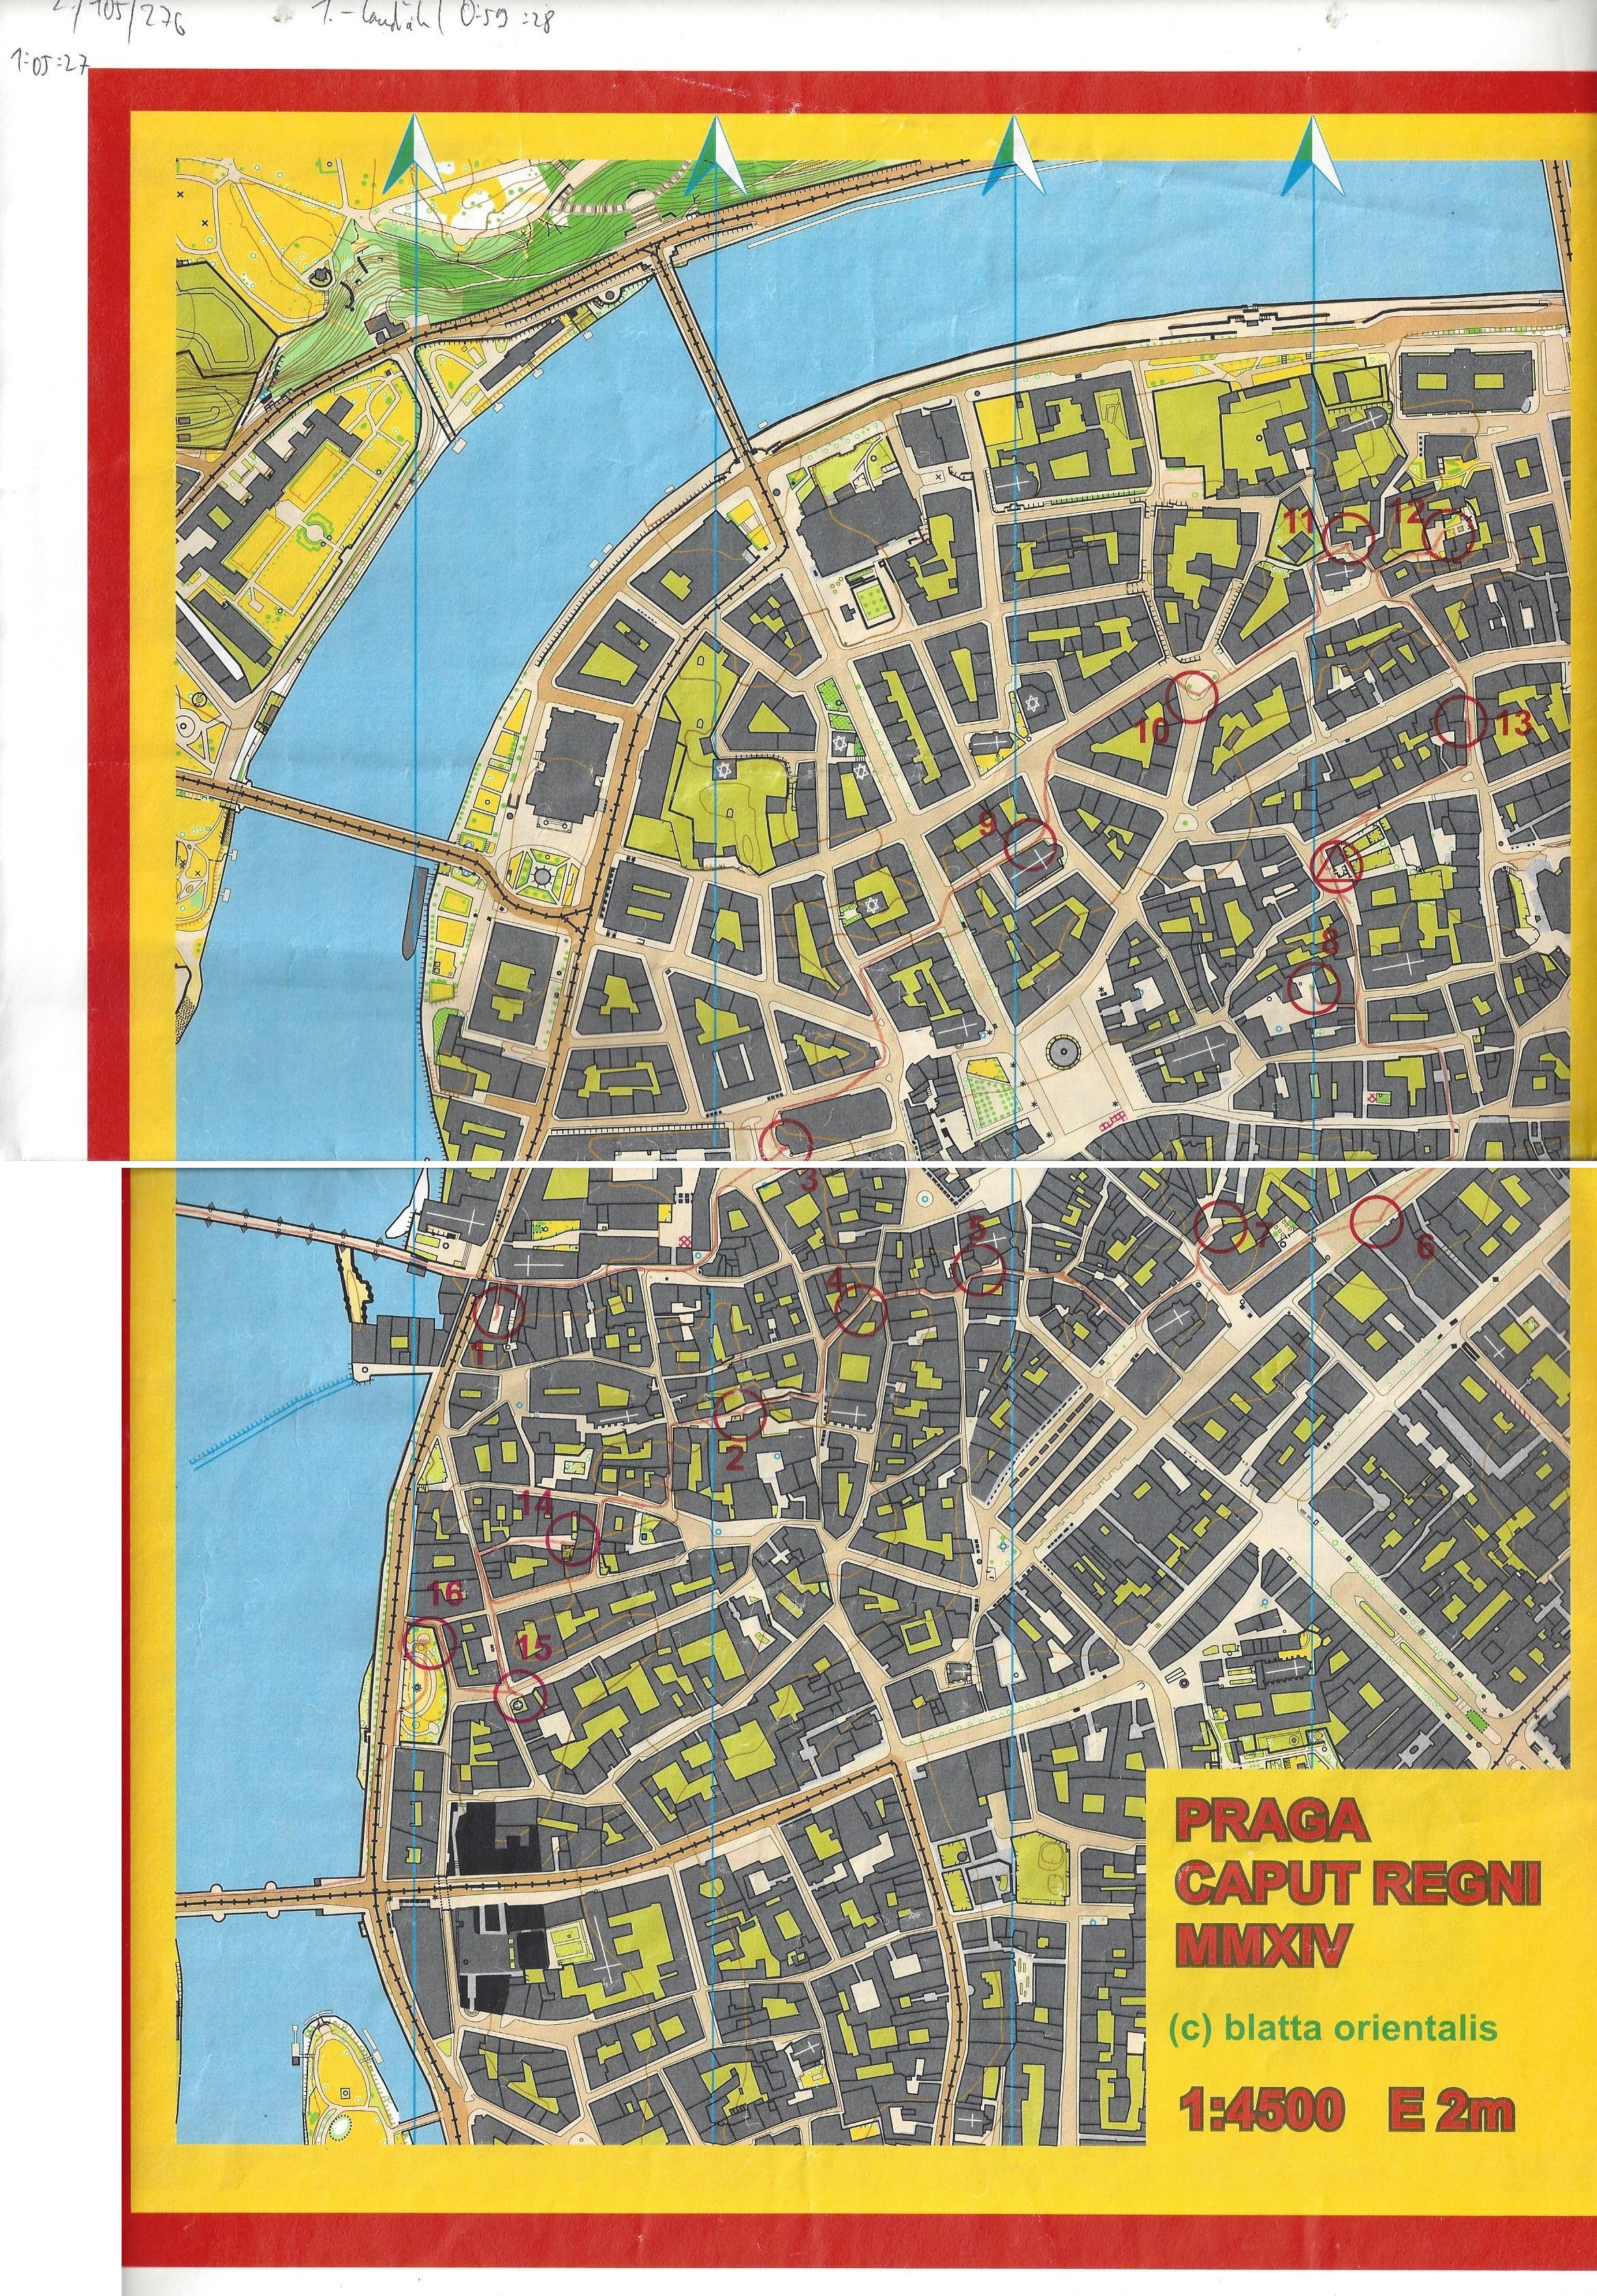 Praga Magica 2014 - mapa 1 (08-03-2014)